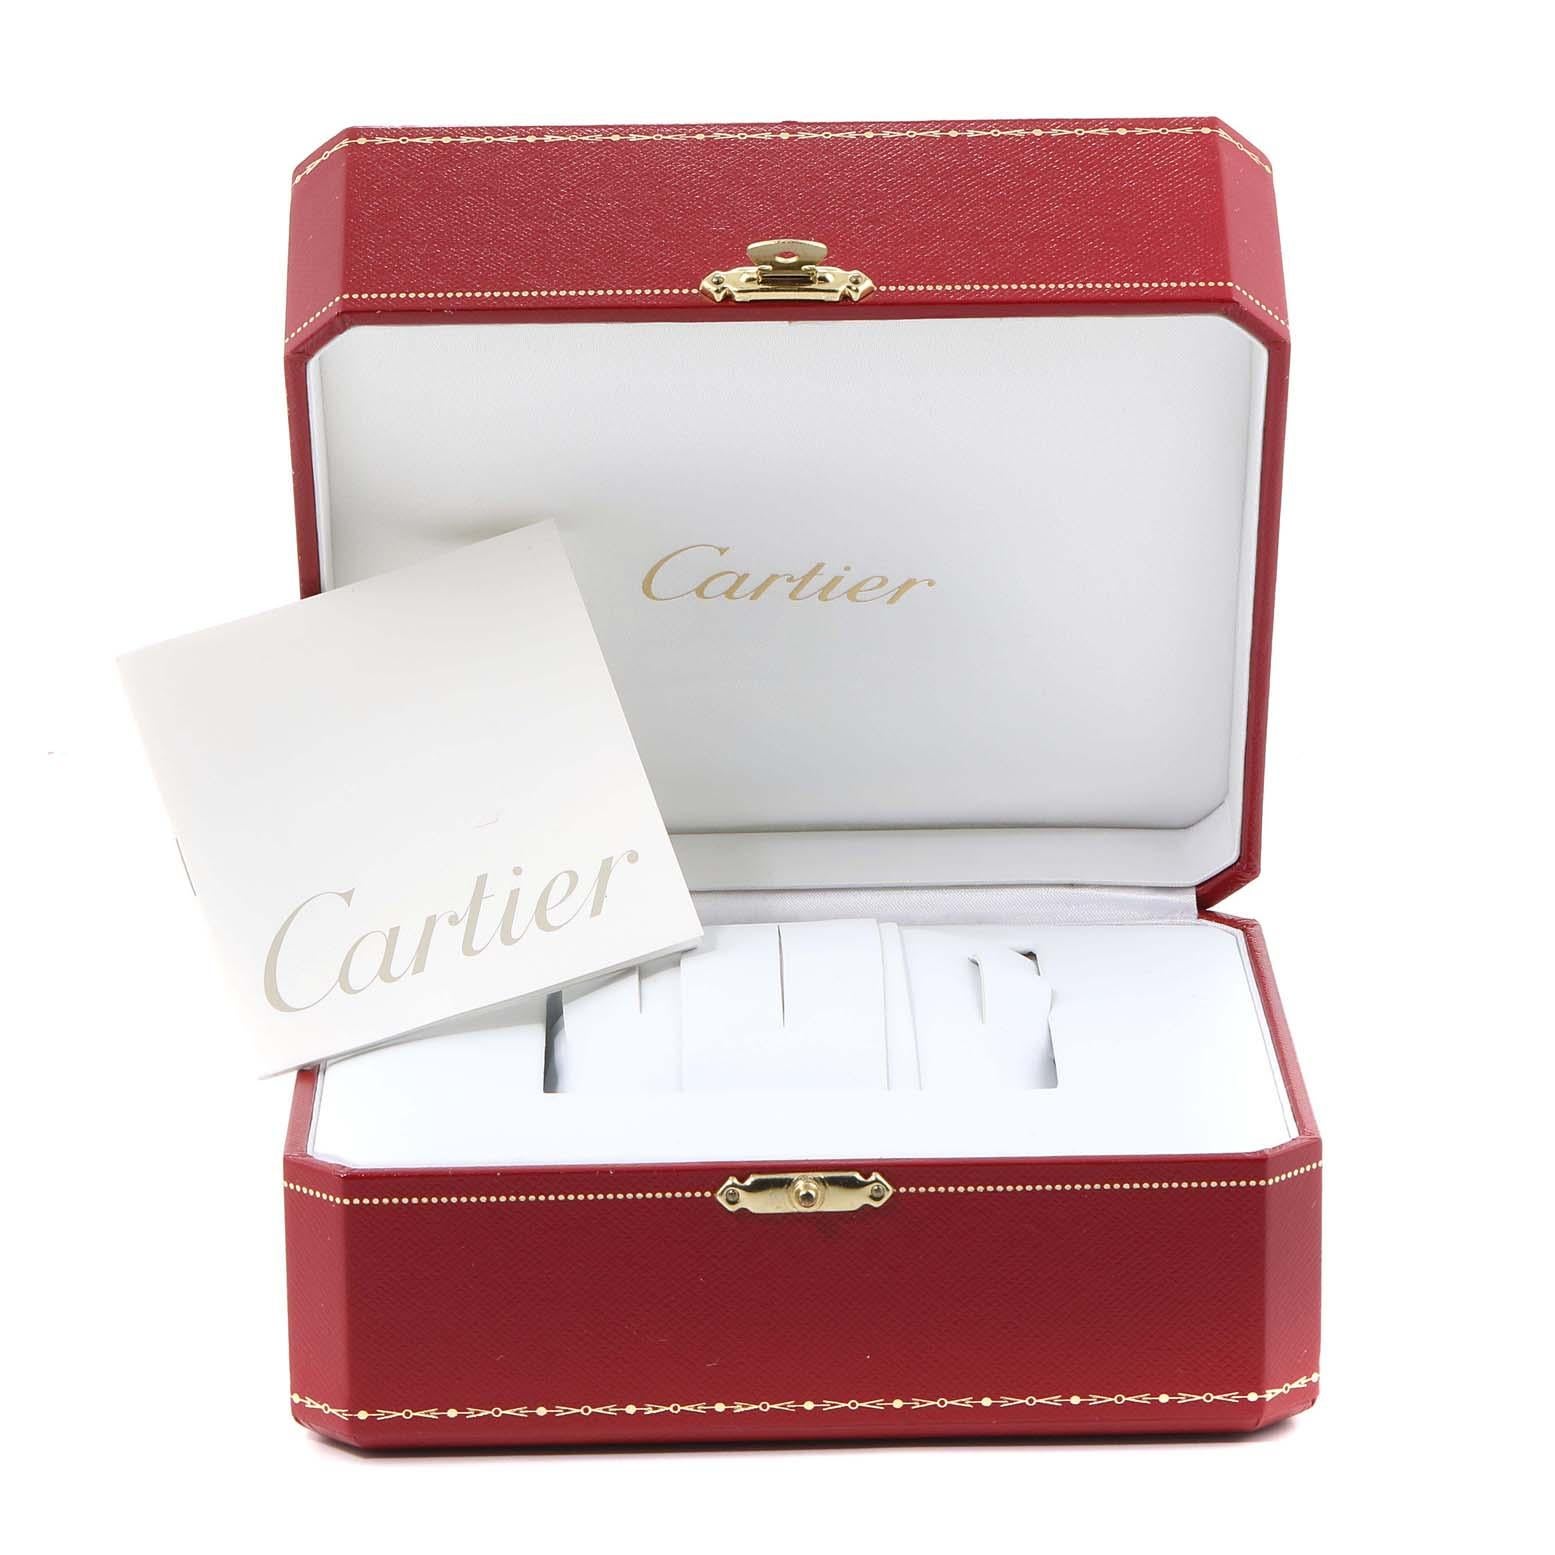 Cartier Pasha Seatimer Chronograph Rubber Strap Ladies Watch W3140005 4